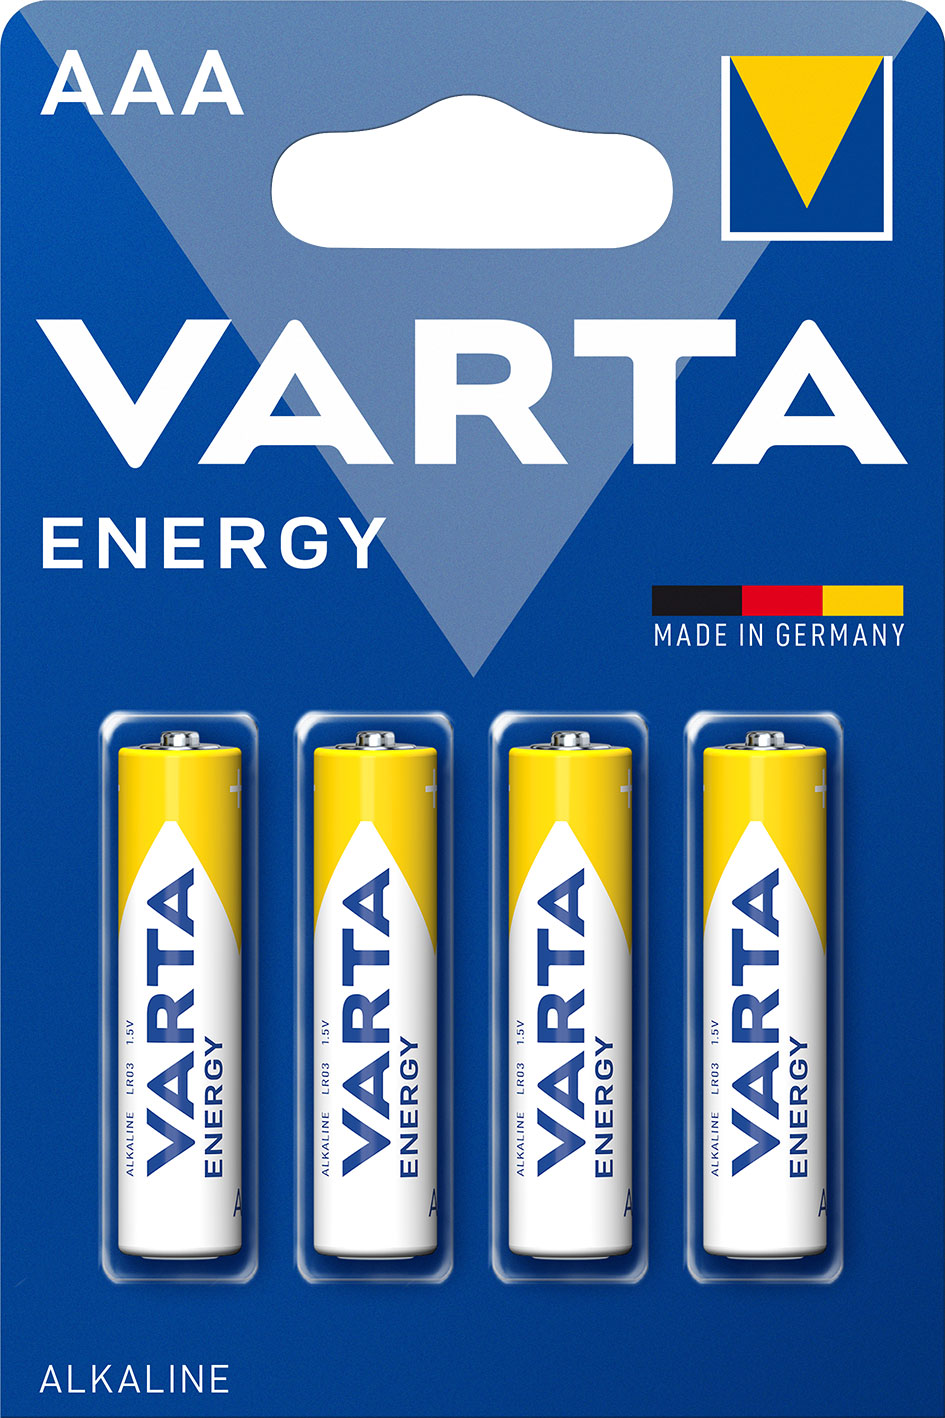 VARTA ENERGY 4 AAA